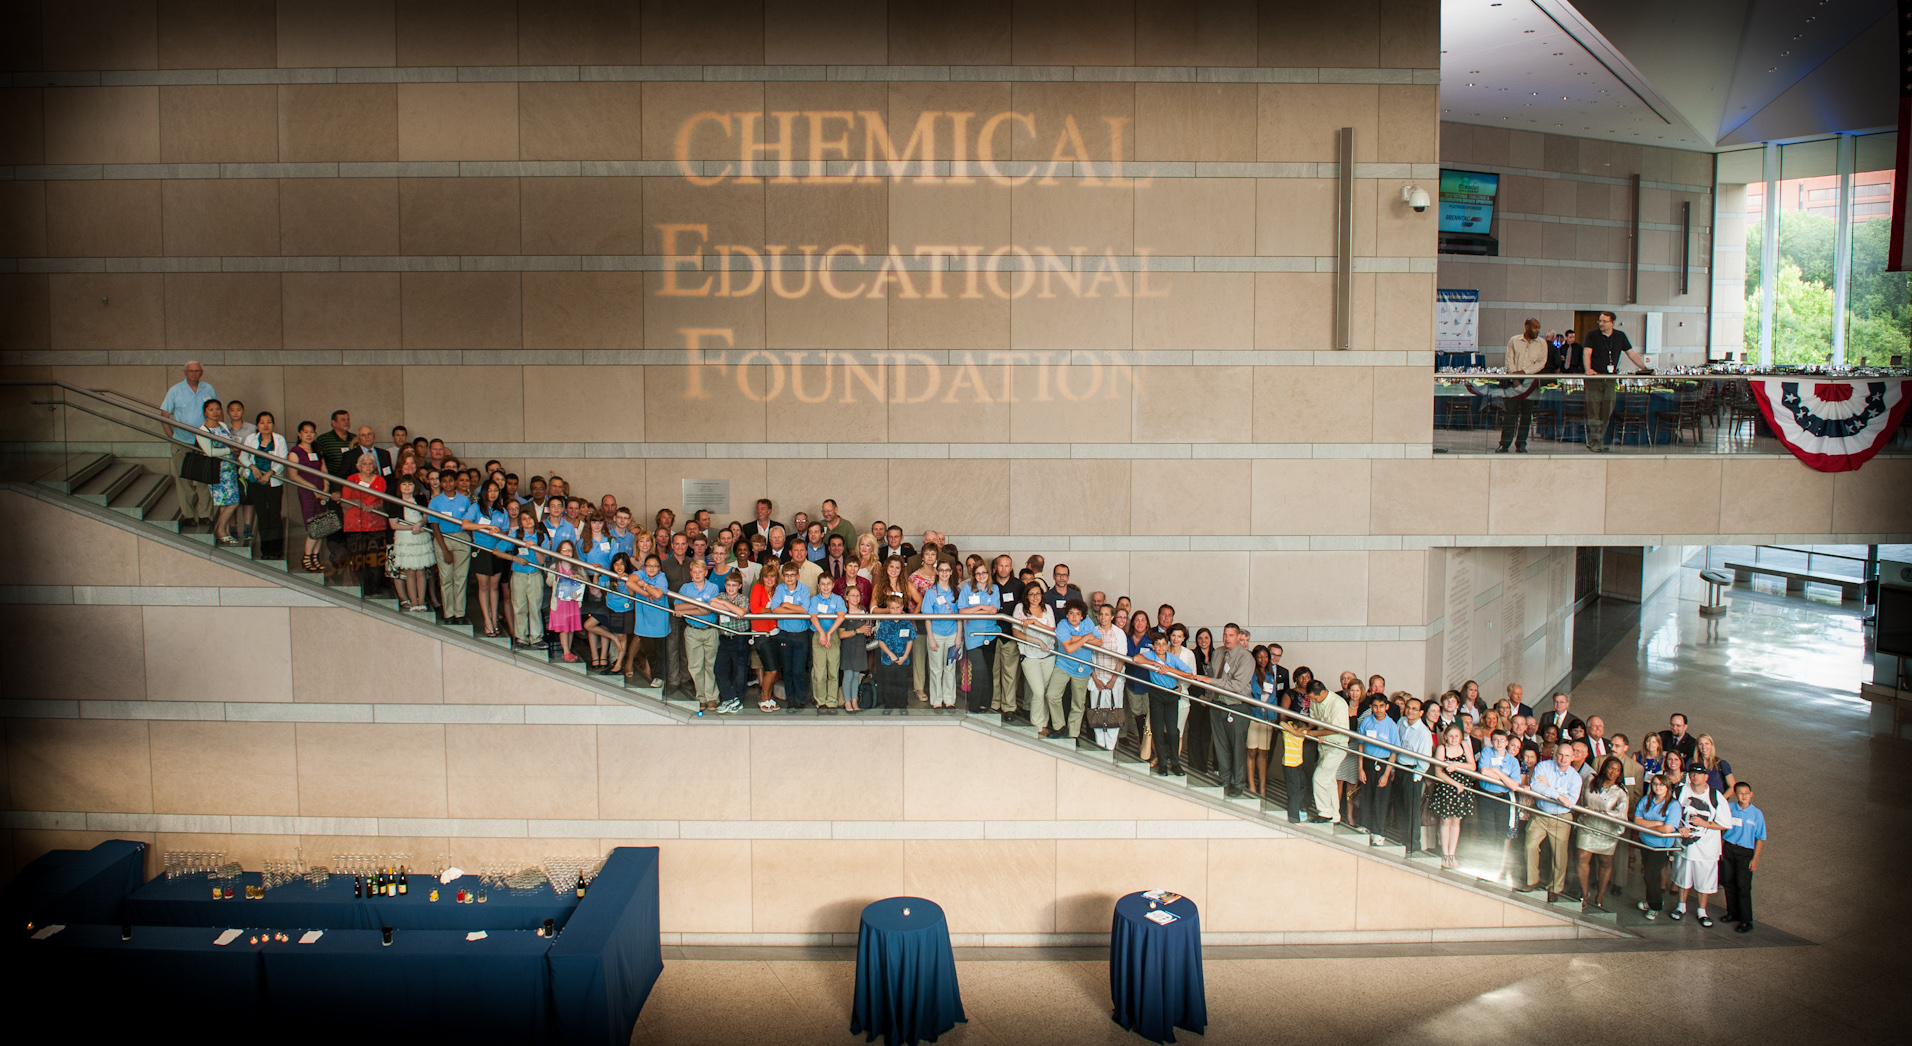 2012 Chemical Educational Foundation